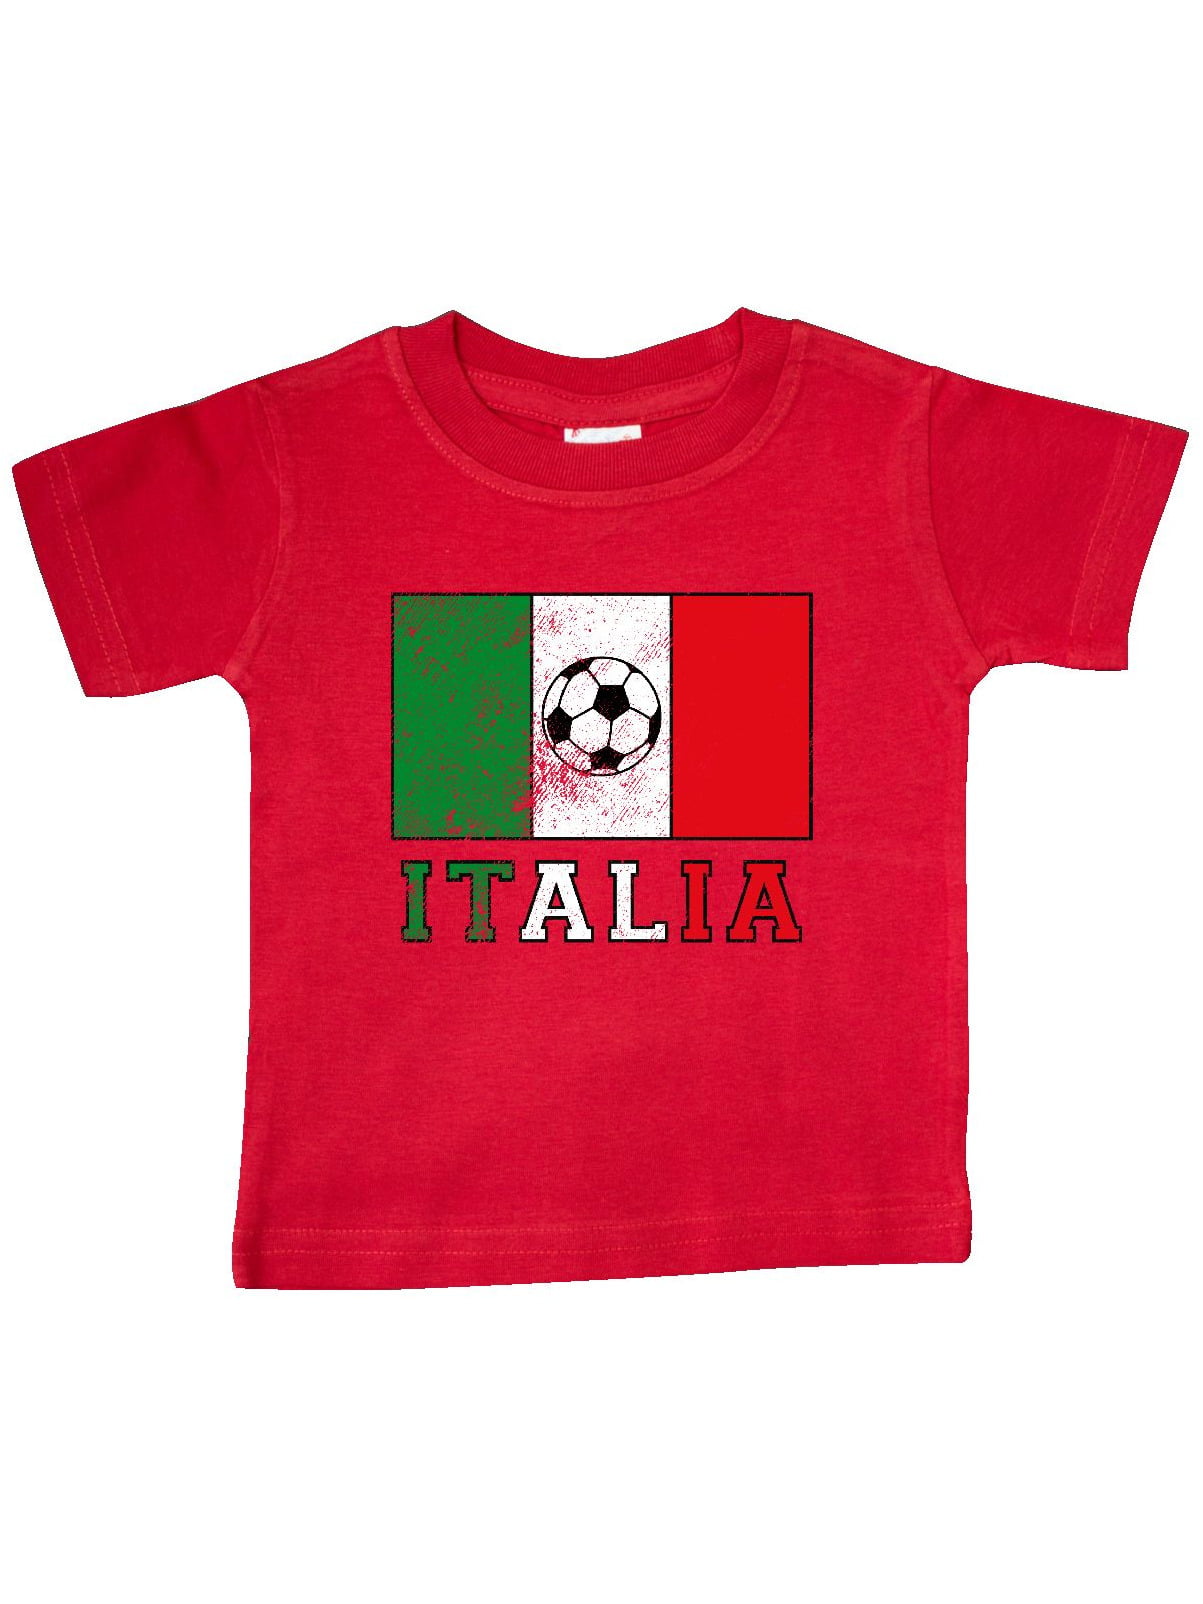 italian soccer shirt